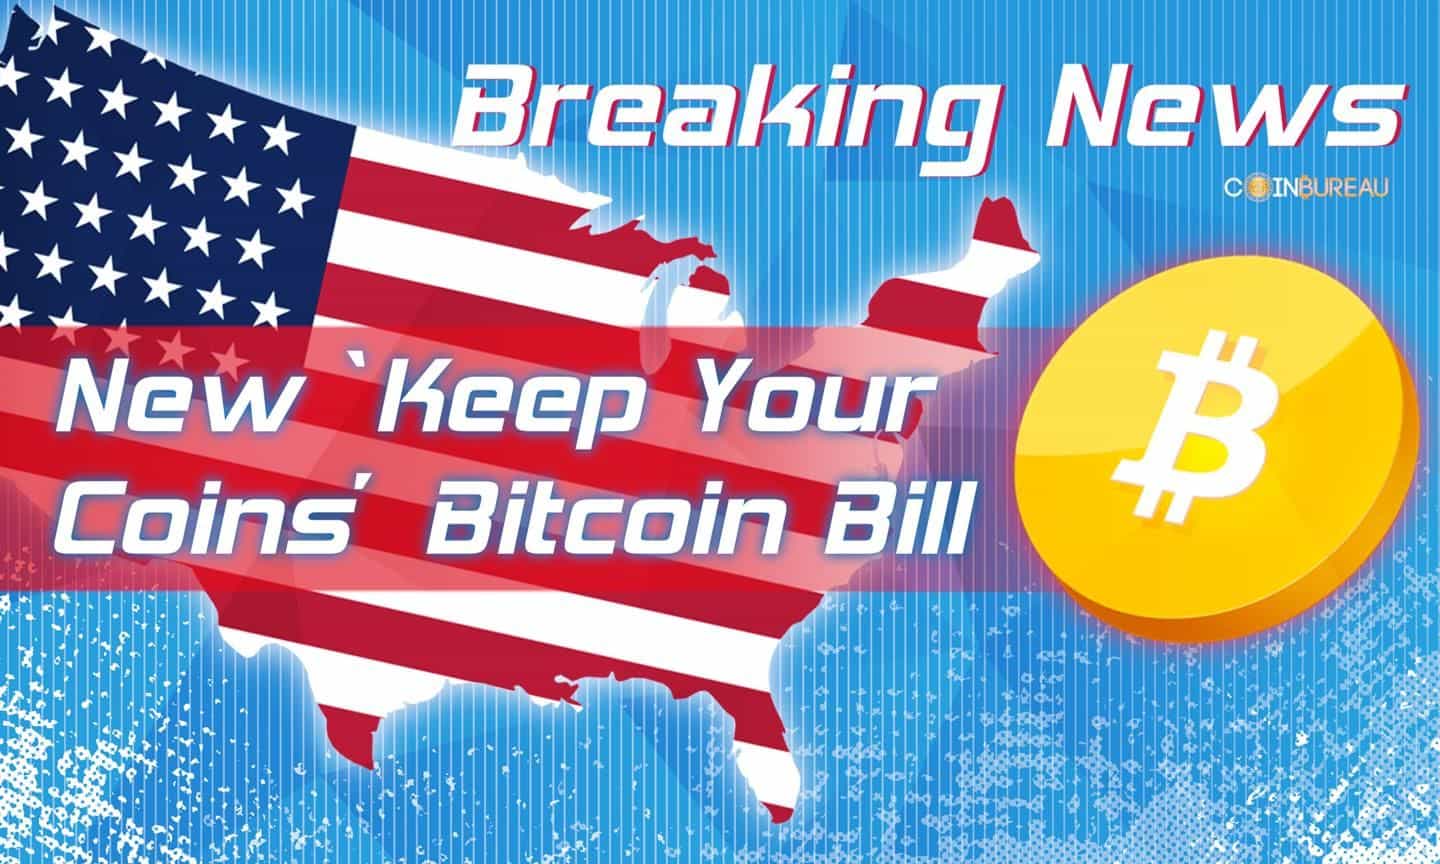 US Senator Introduces New ‘Keep Your Coins’ Bitcoin Bill: Report